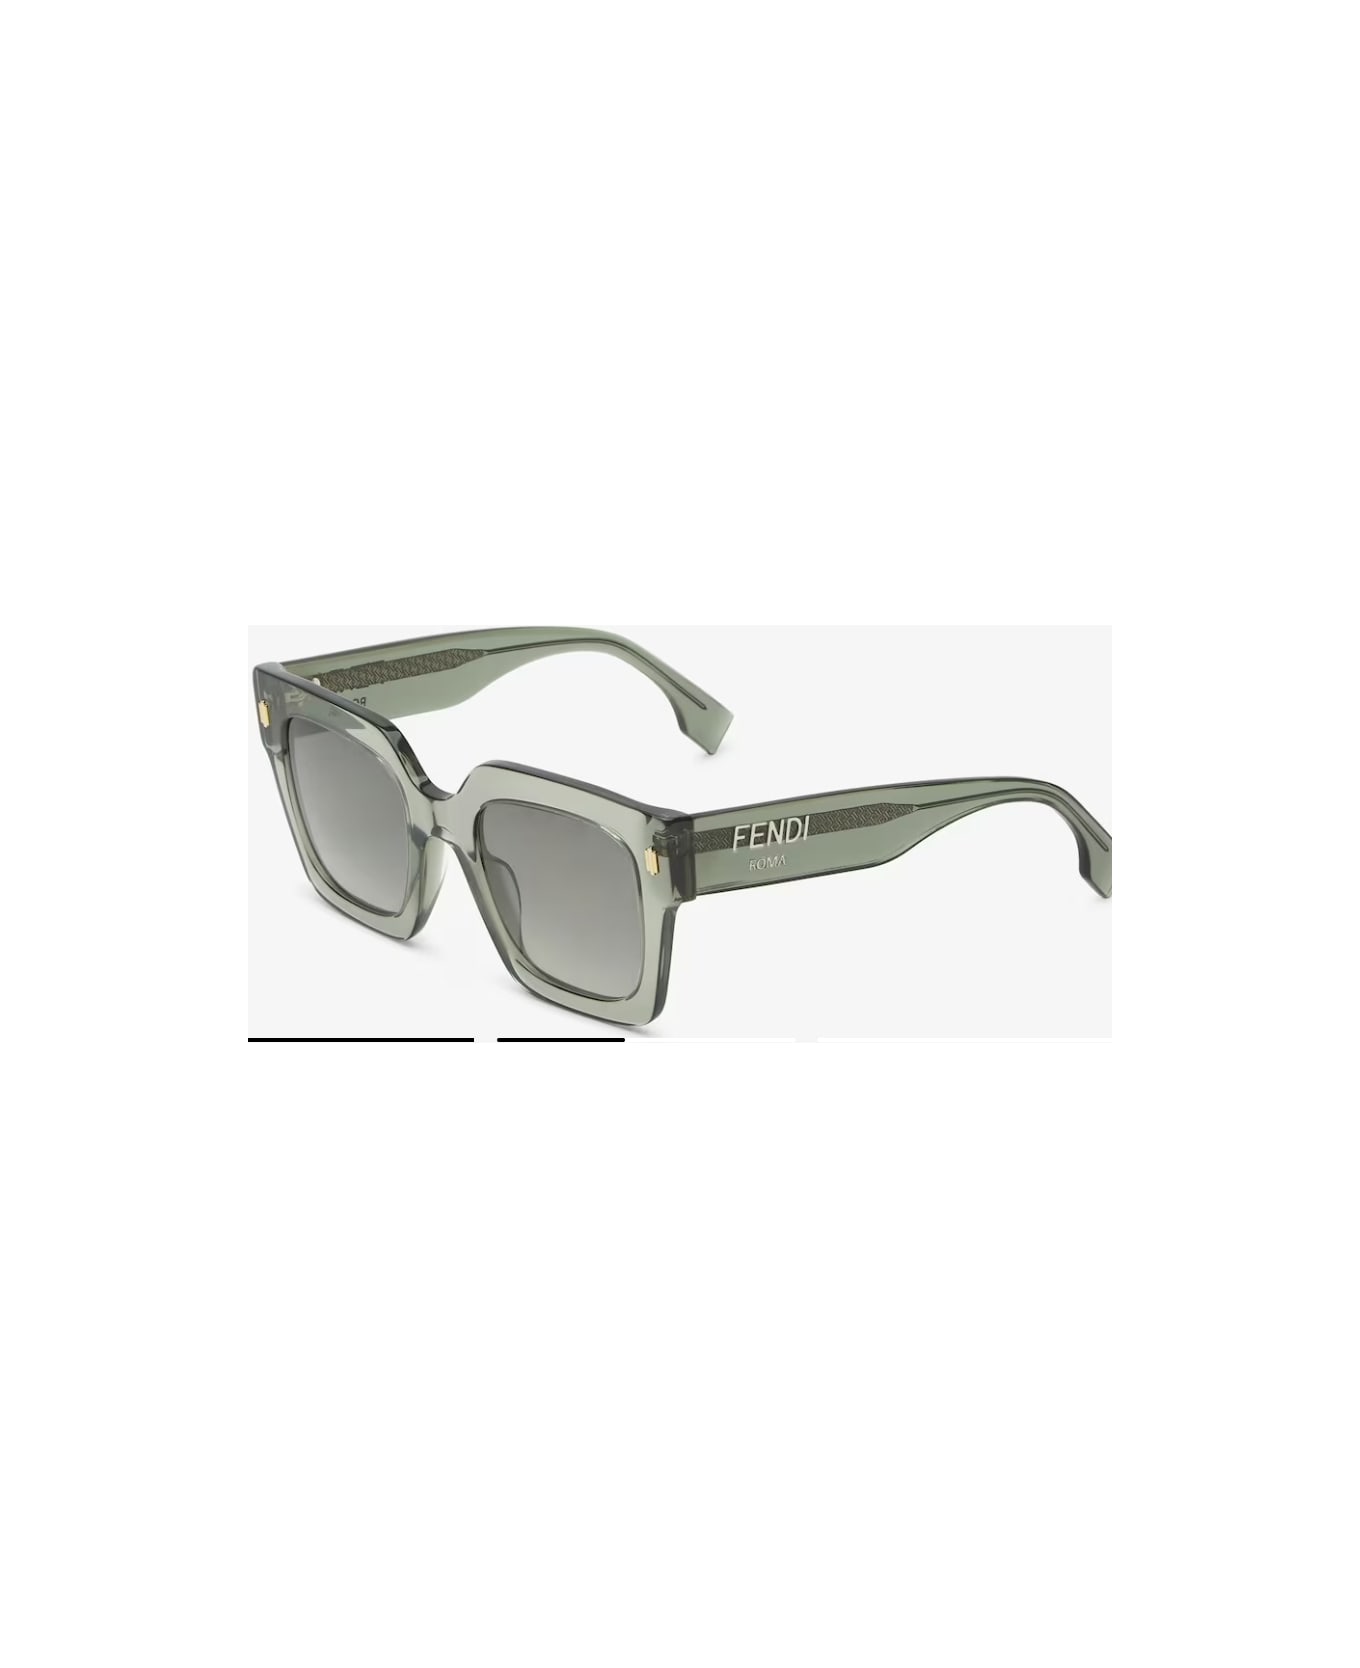 Fendi Eyewear FE40101i 20B Sunglasses - Verde